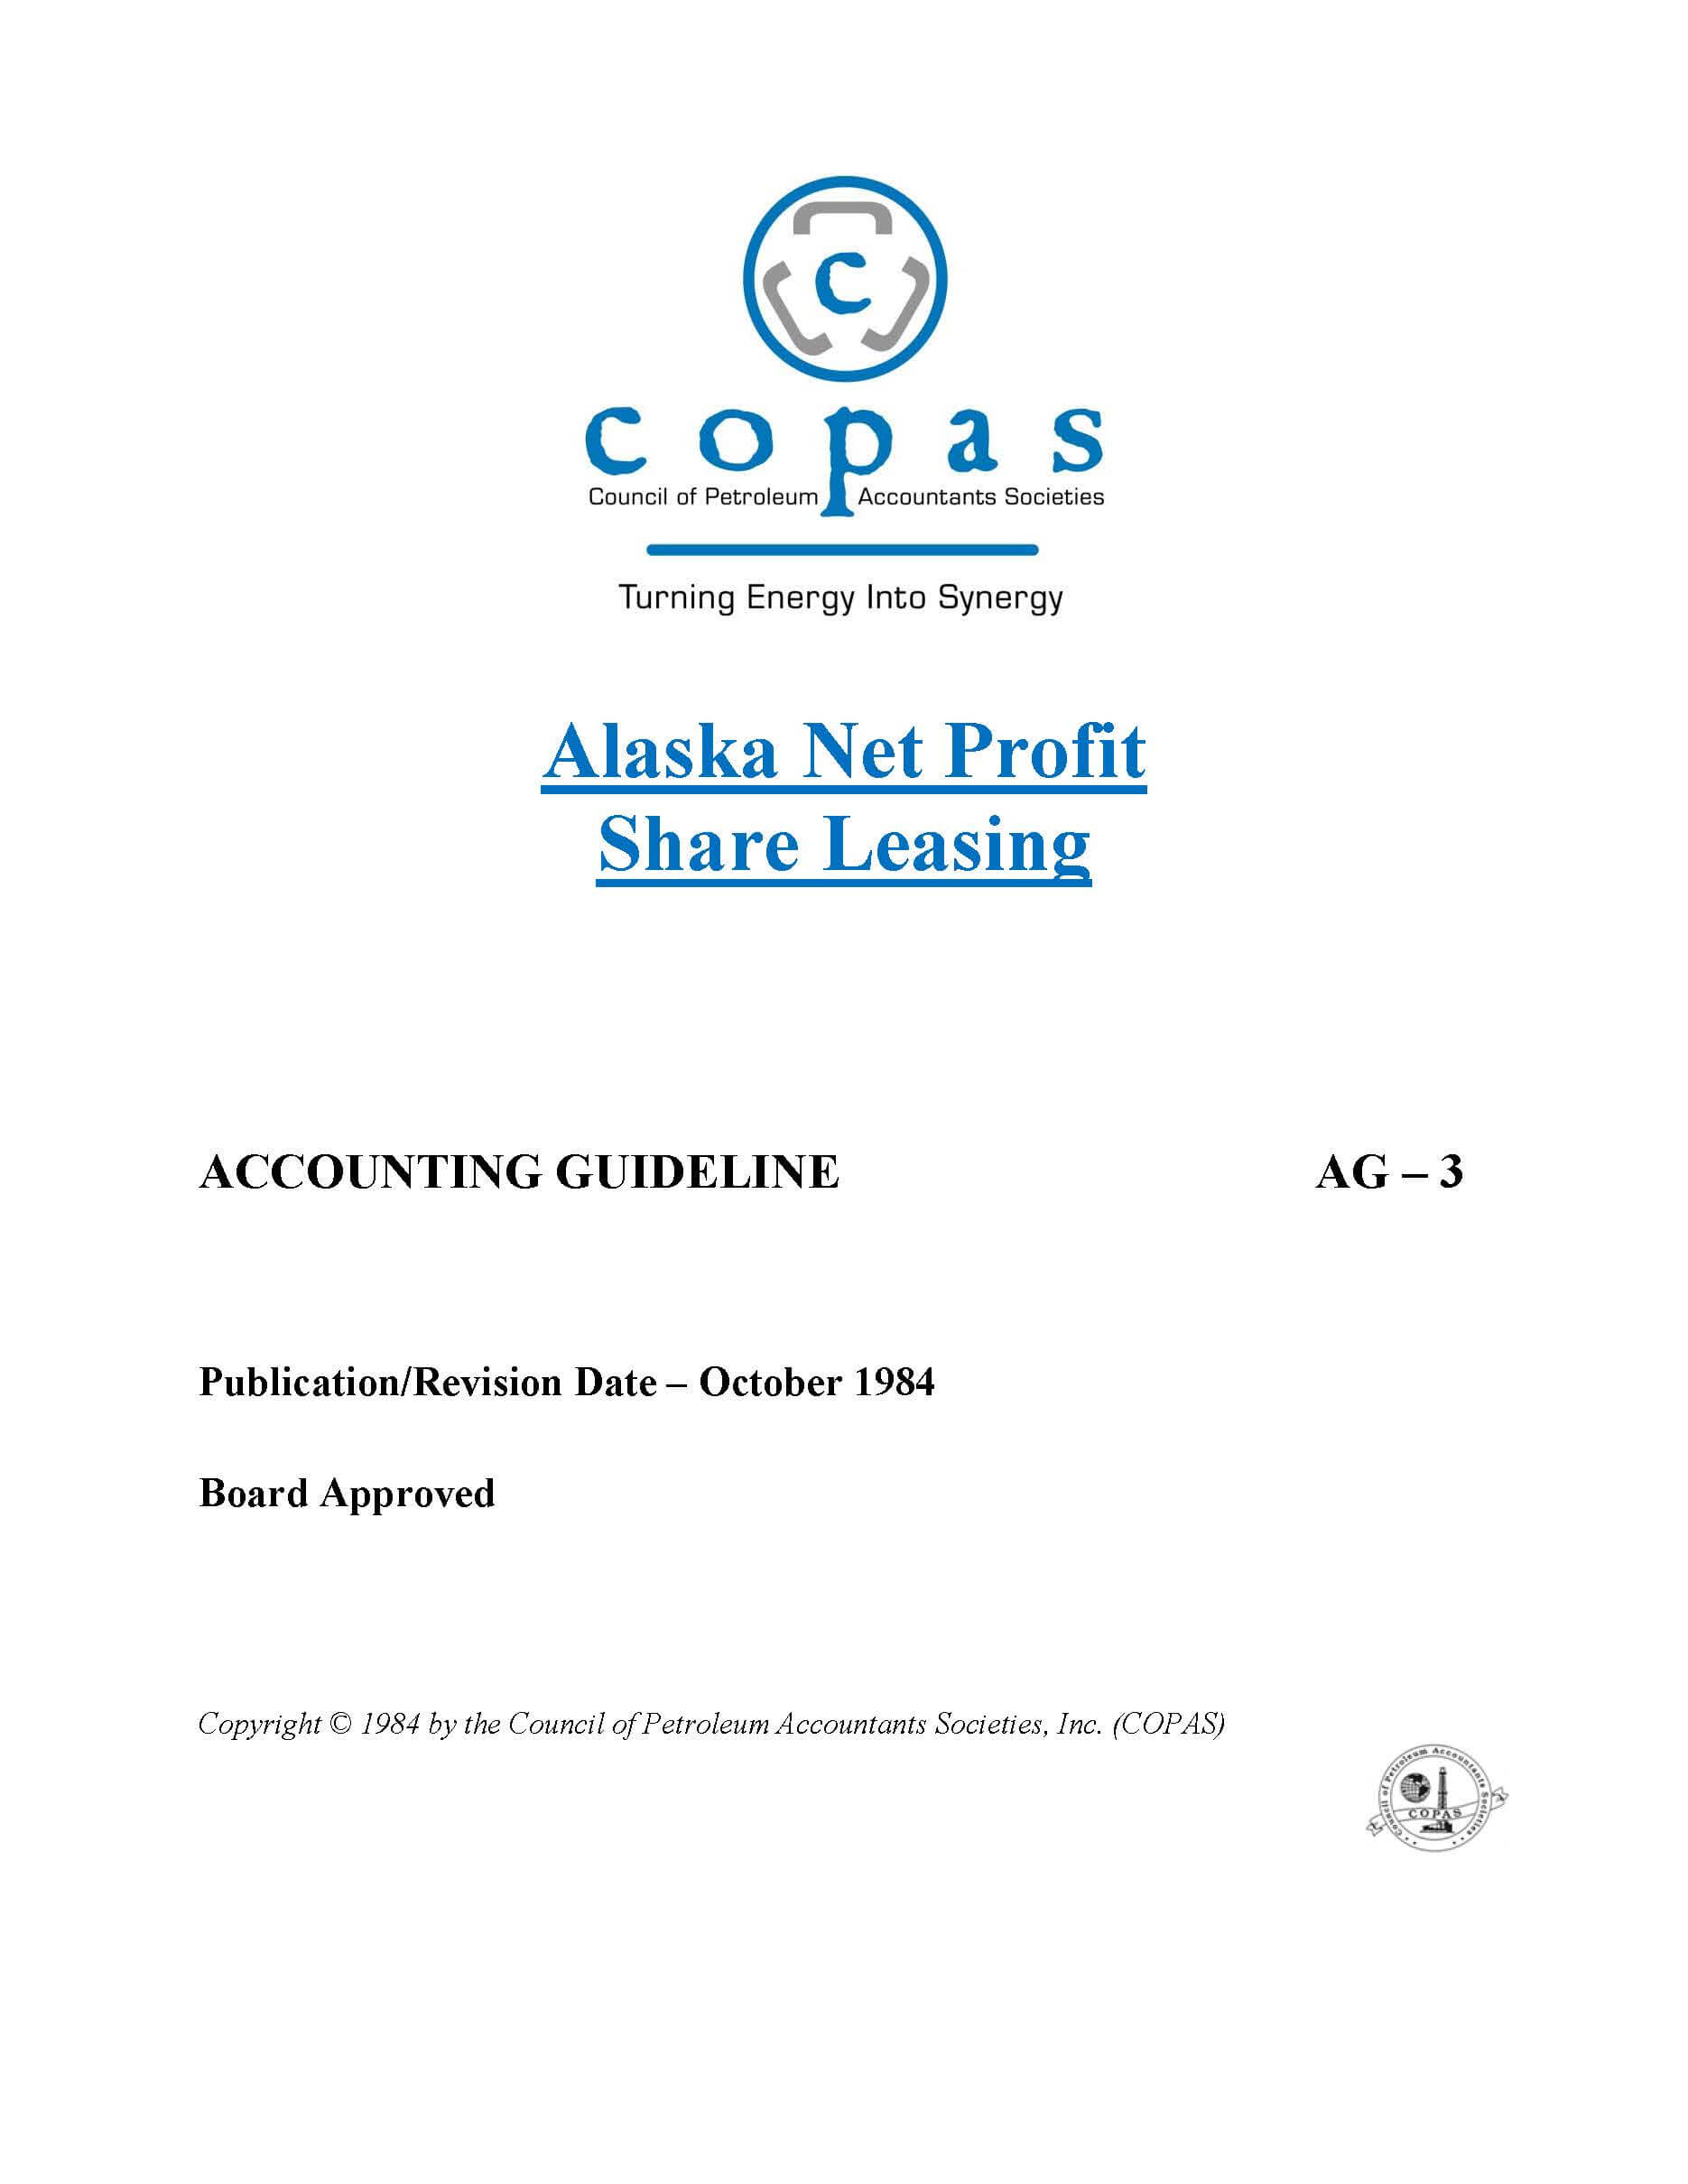 AG-3 Alaska Net Profit Share Leasing